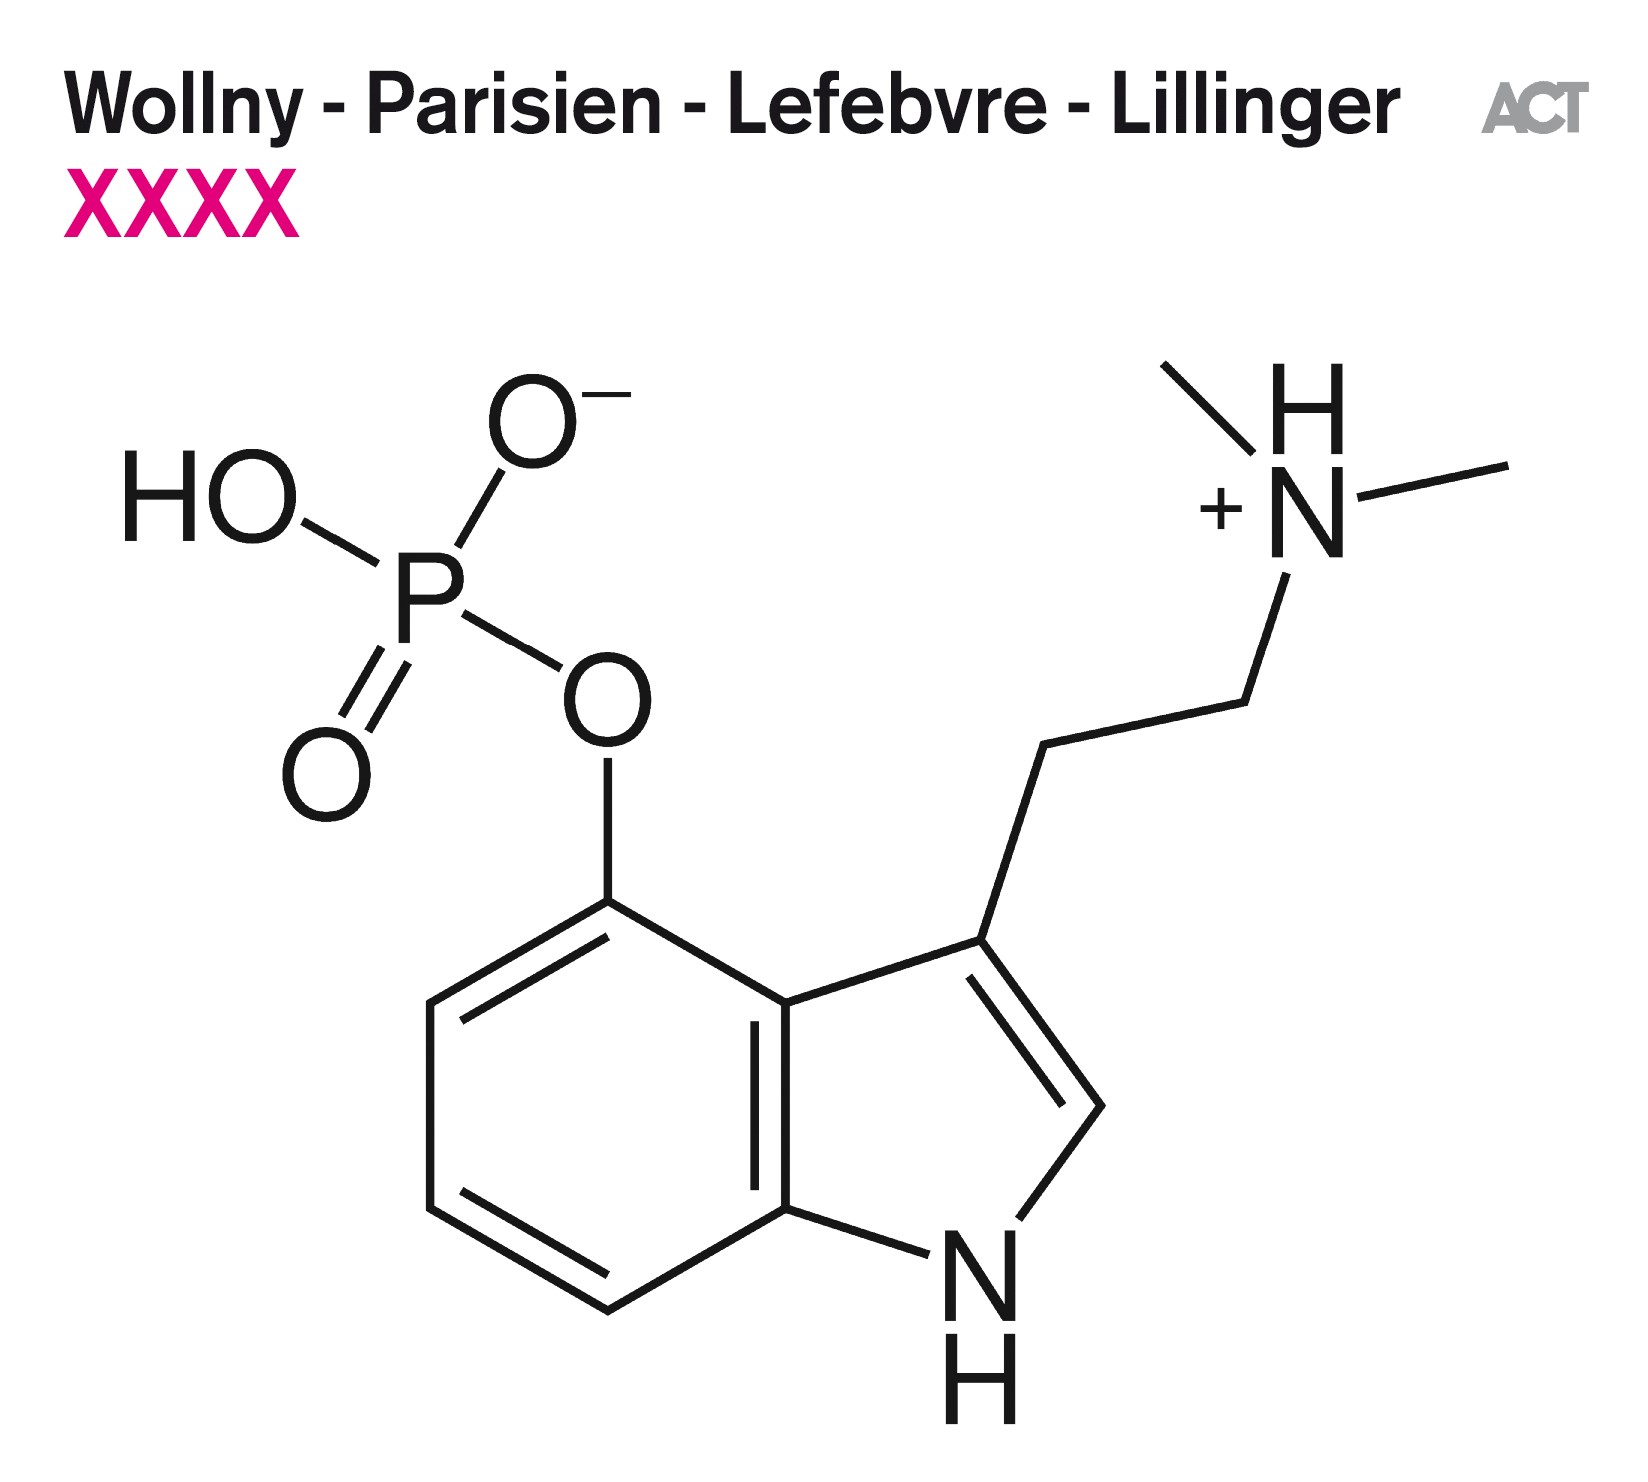 Review of Wollny/Parisien/Lefebvre/Lillinger: XXXX